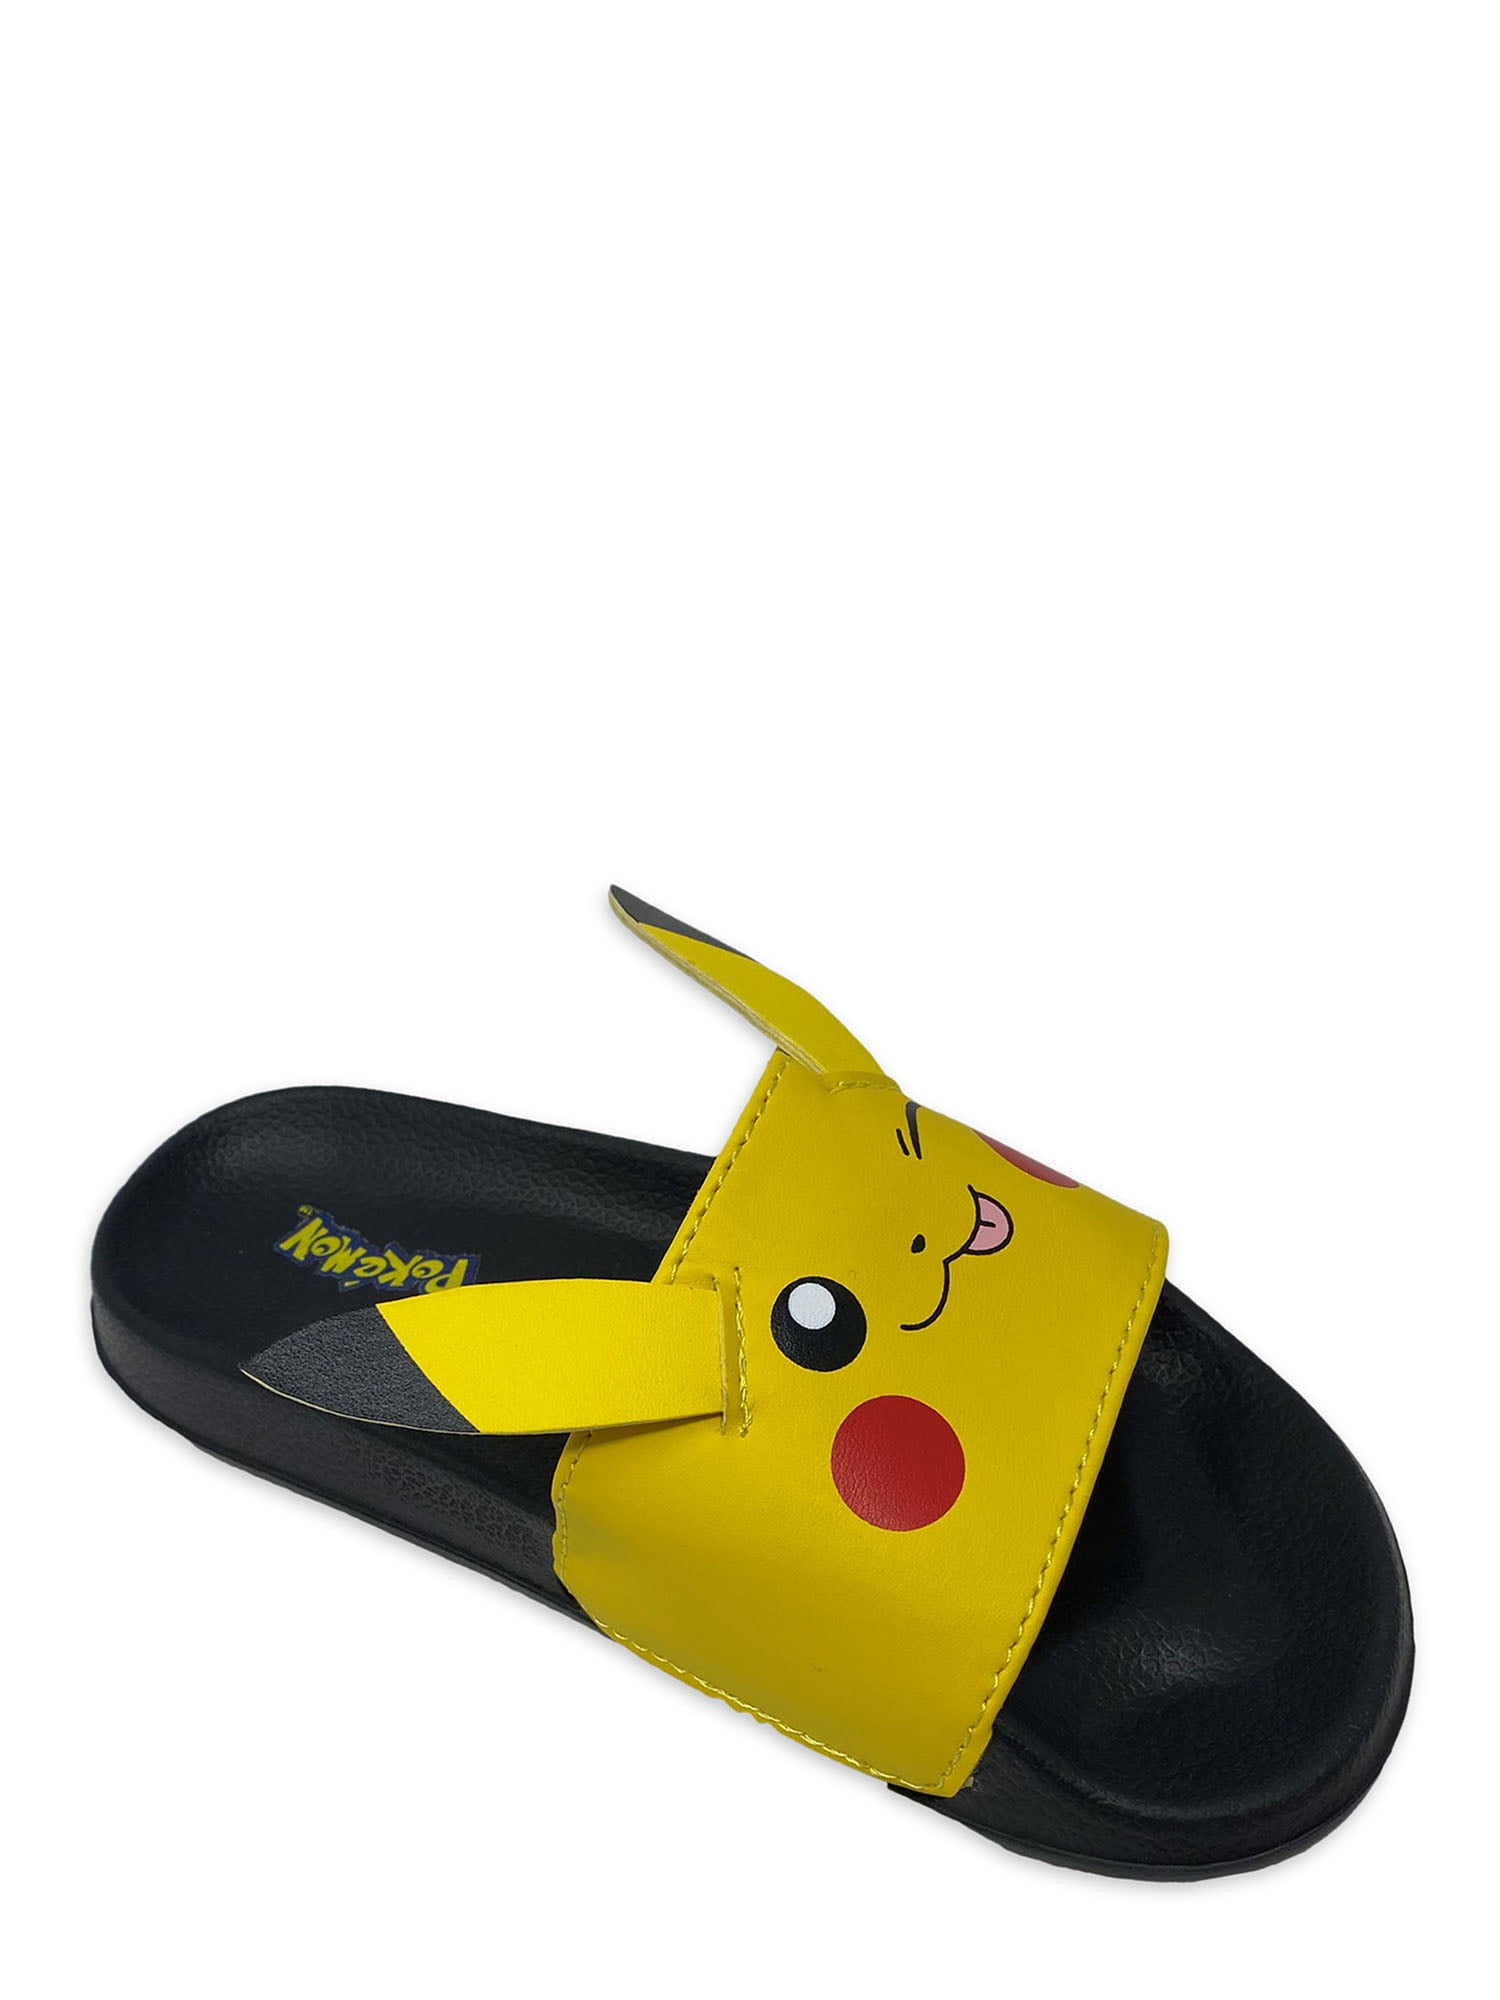 Pokémon Pikachu Boys Black and Yellow Cushioned Slippers